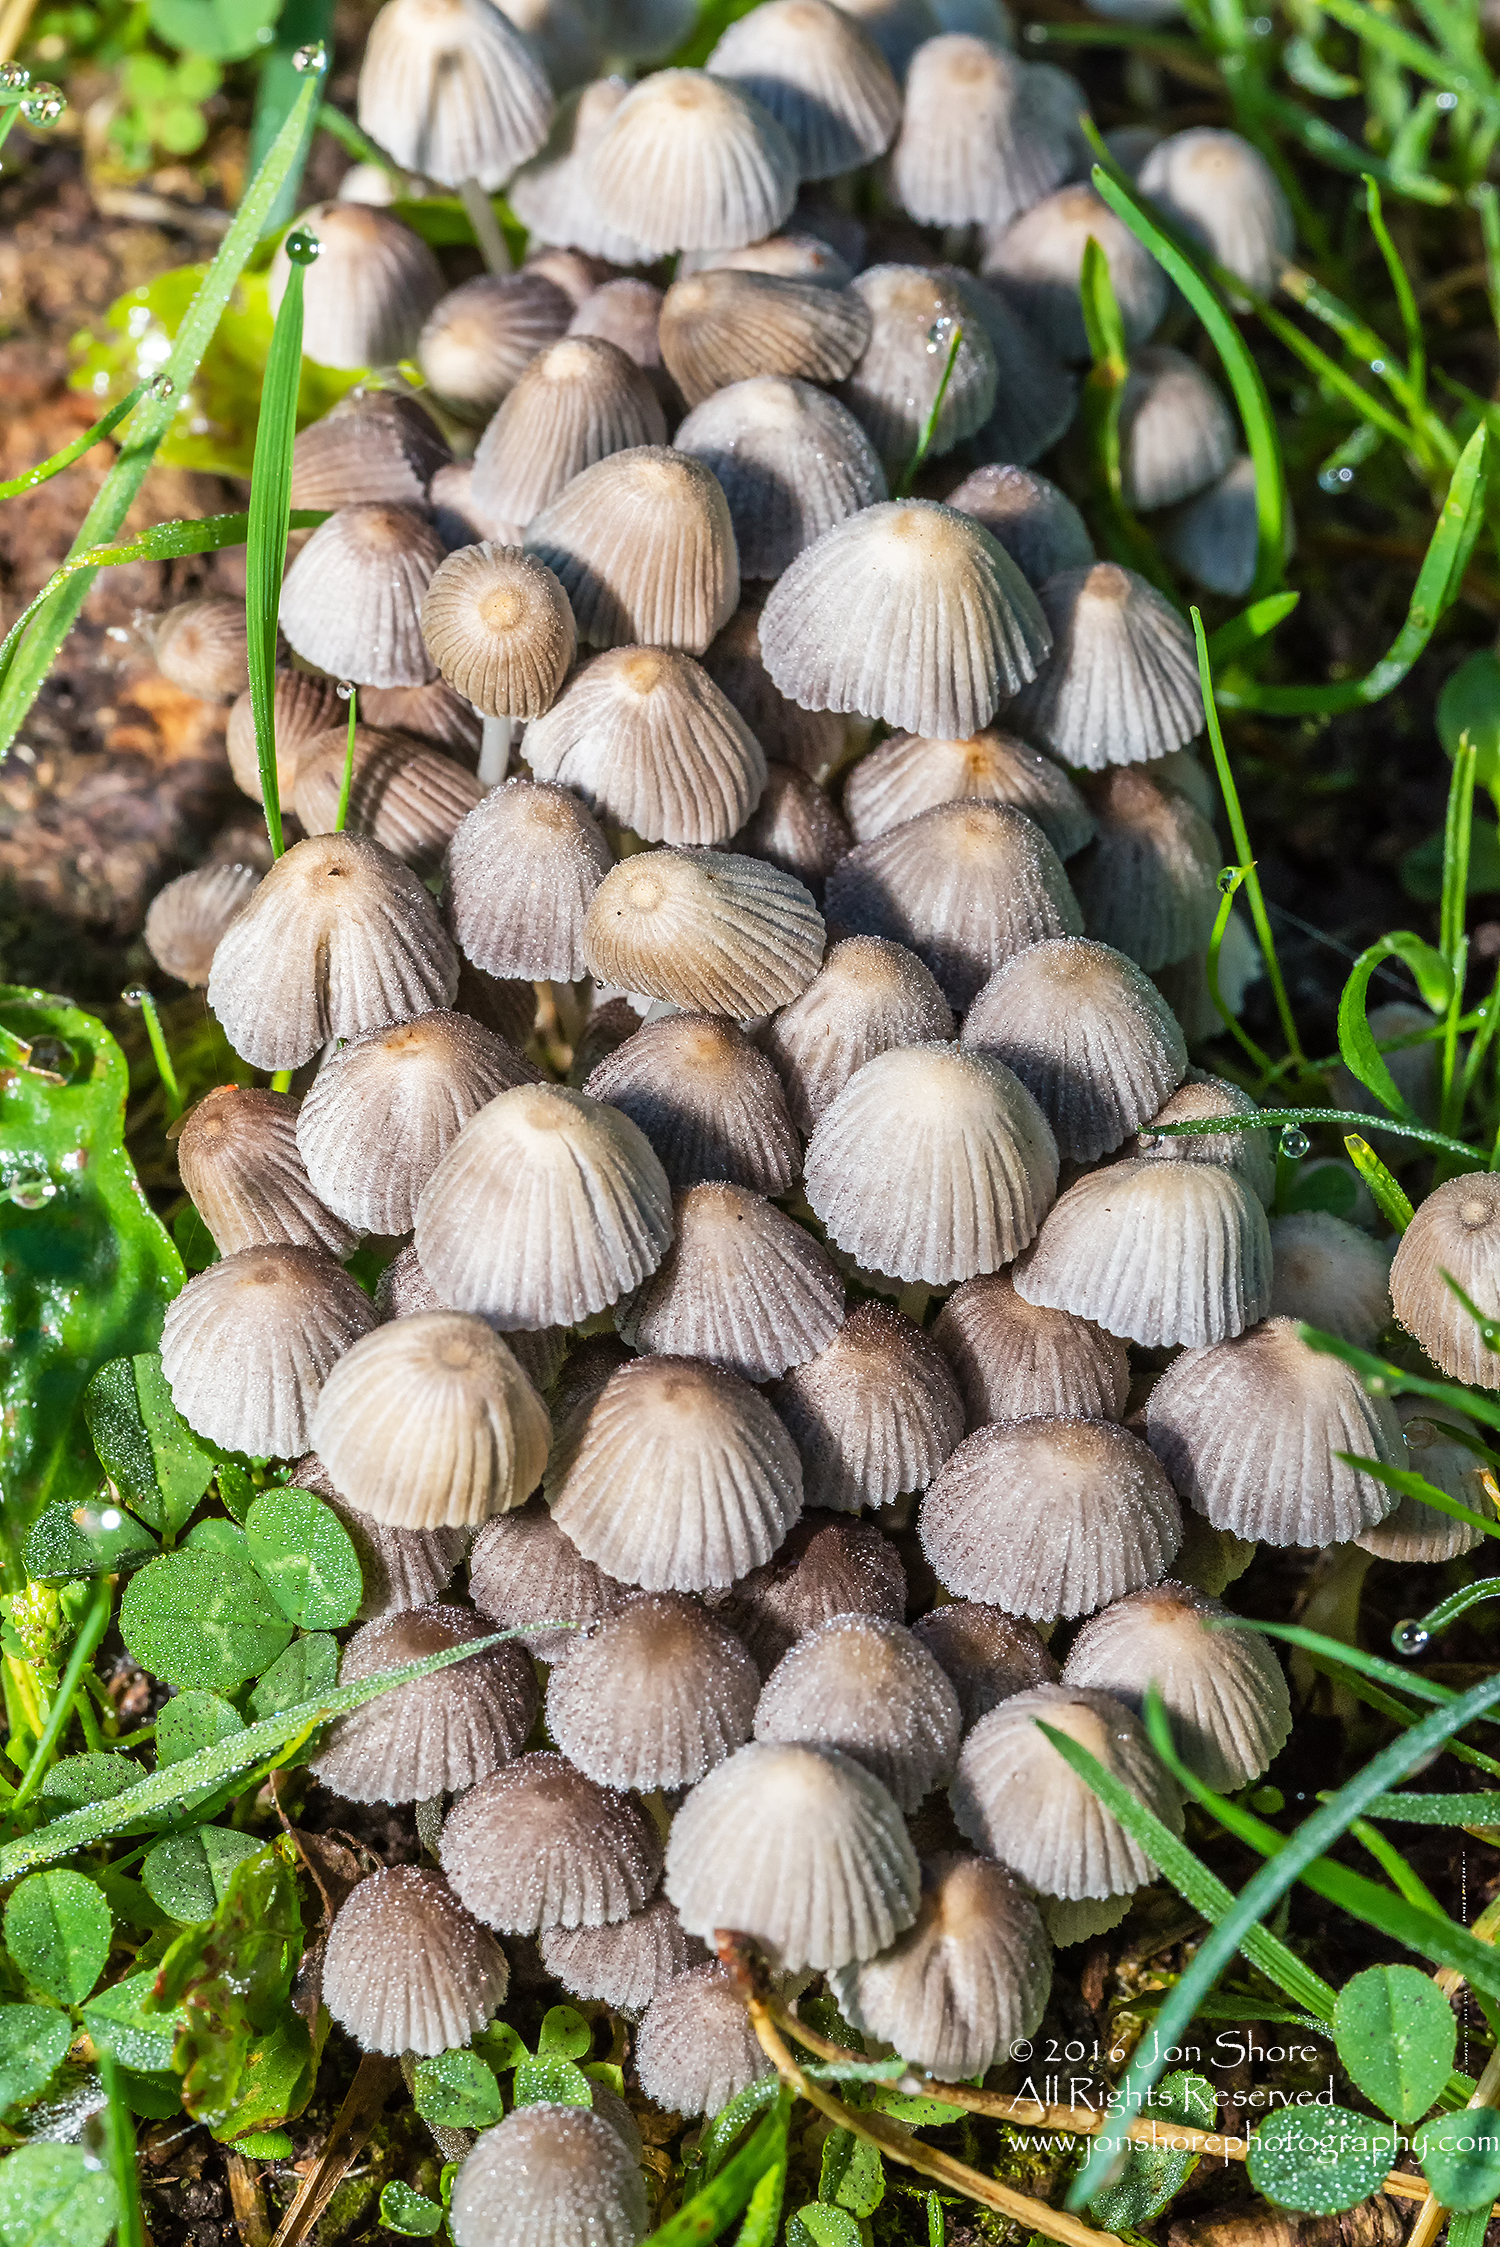 Wild Mushrooms Close-up - Burtnieks, Latvia. Tamron 90mm Macro lens